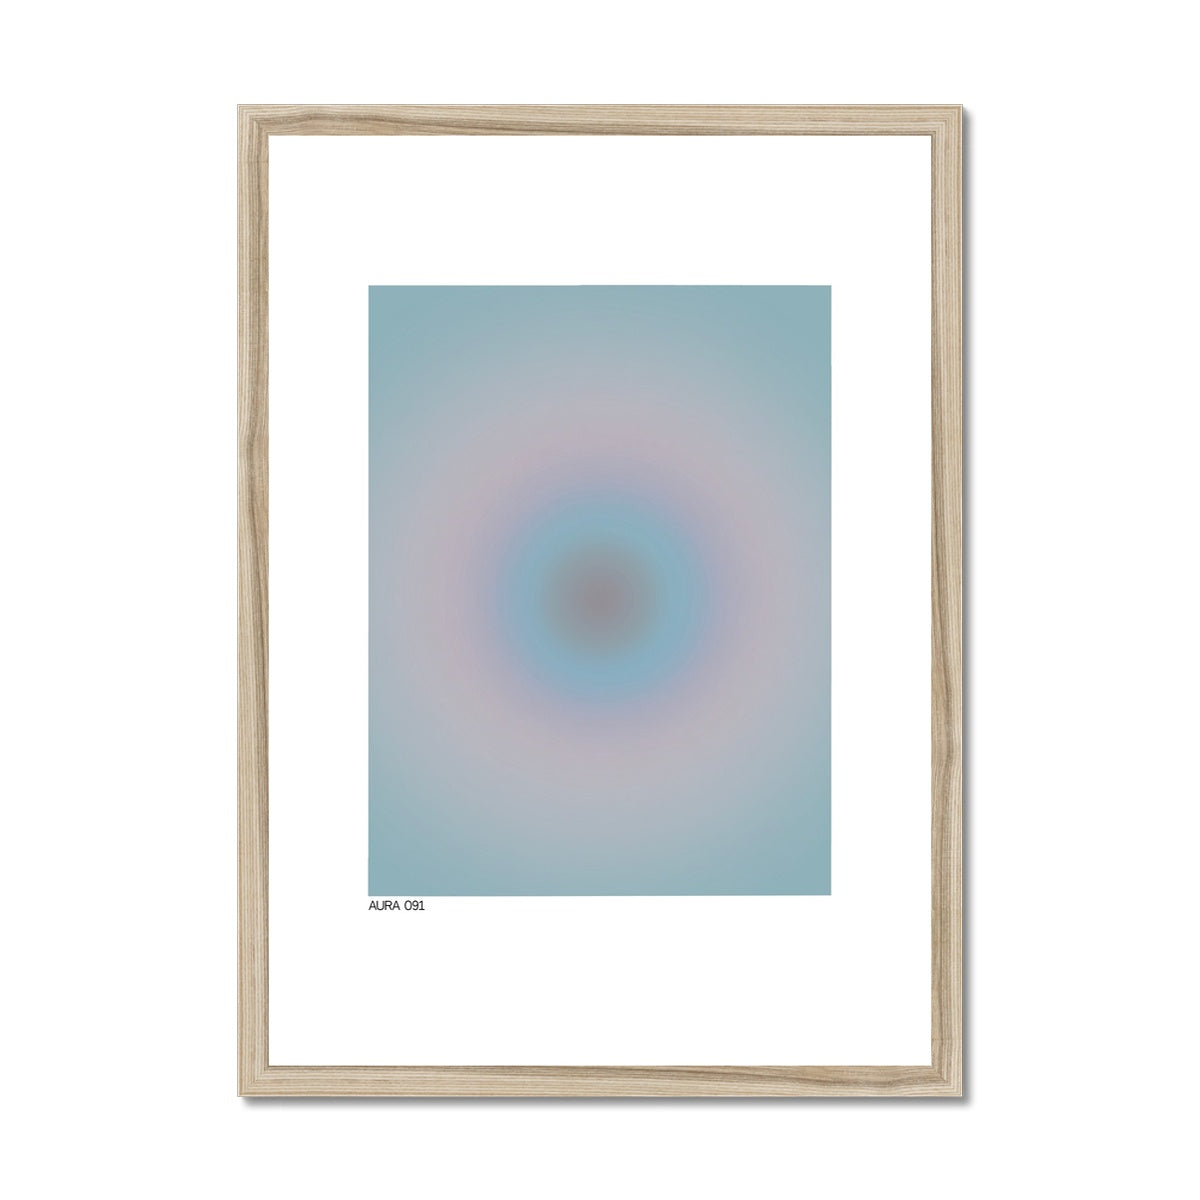 aura 091 Framed & Mounted Print